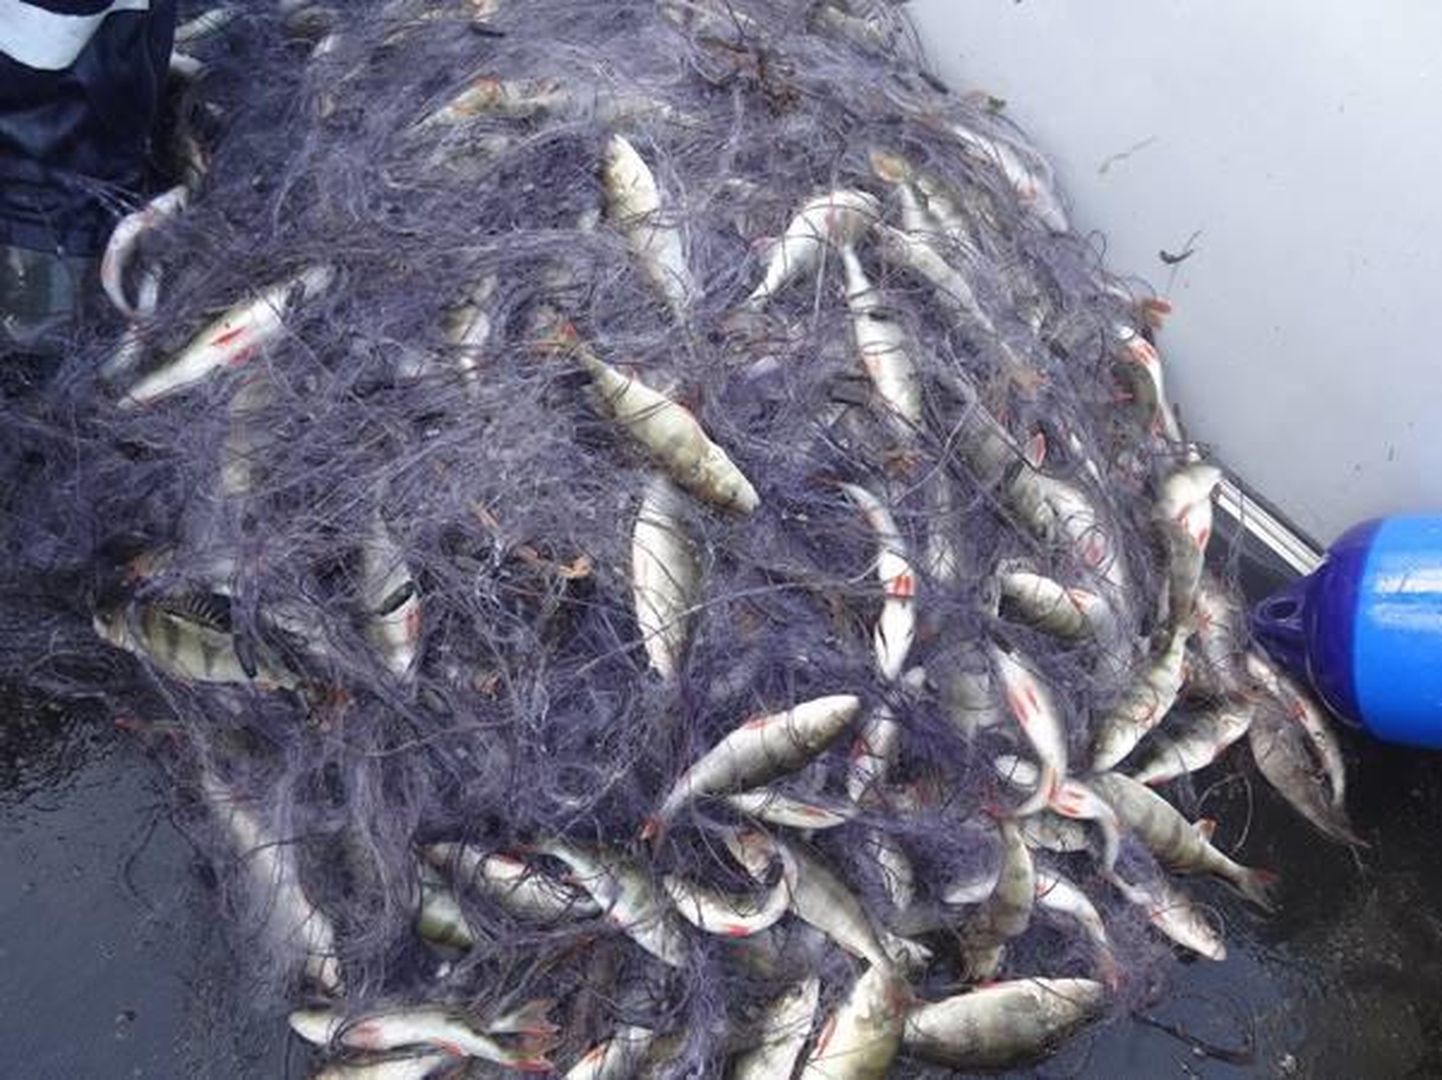 Нарушая правила рыболовства Калле Умб нанес ущерб почти на 18 000 евро.